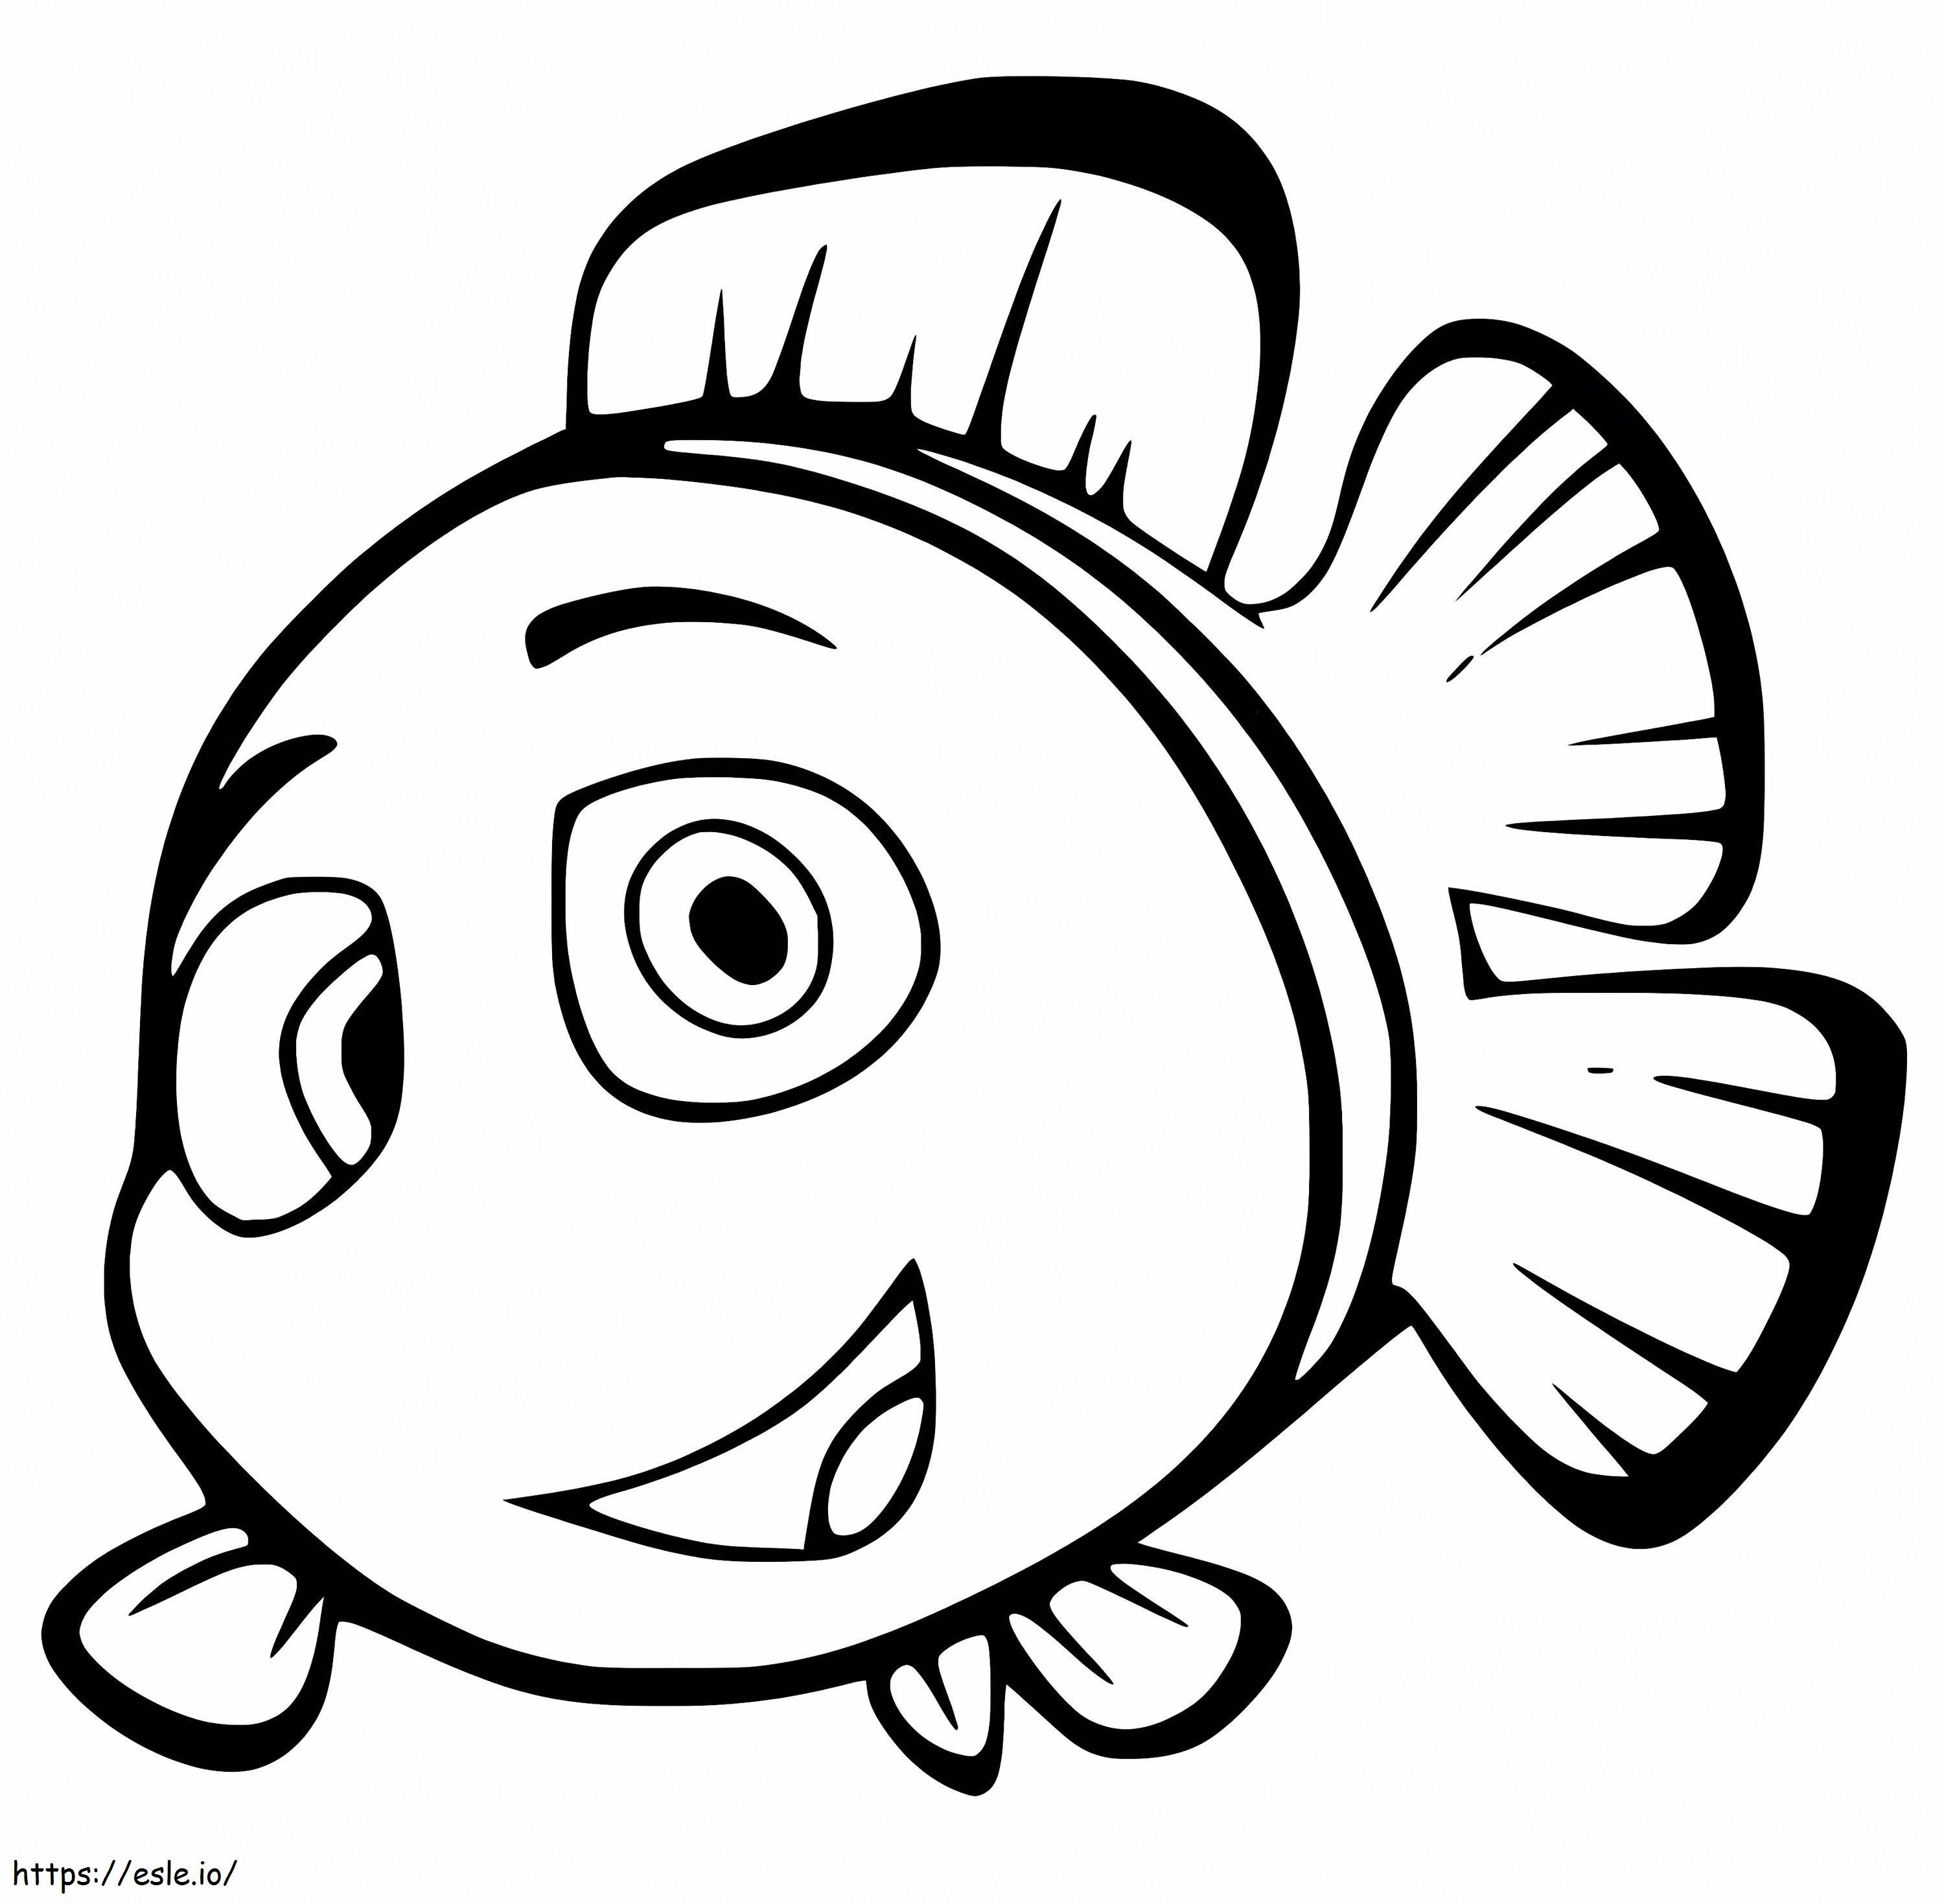 Cartoon Clownfish coloring page